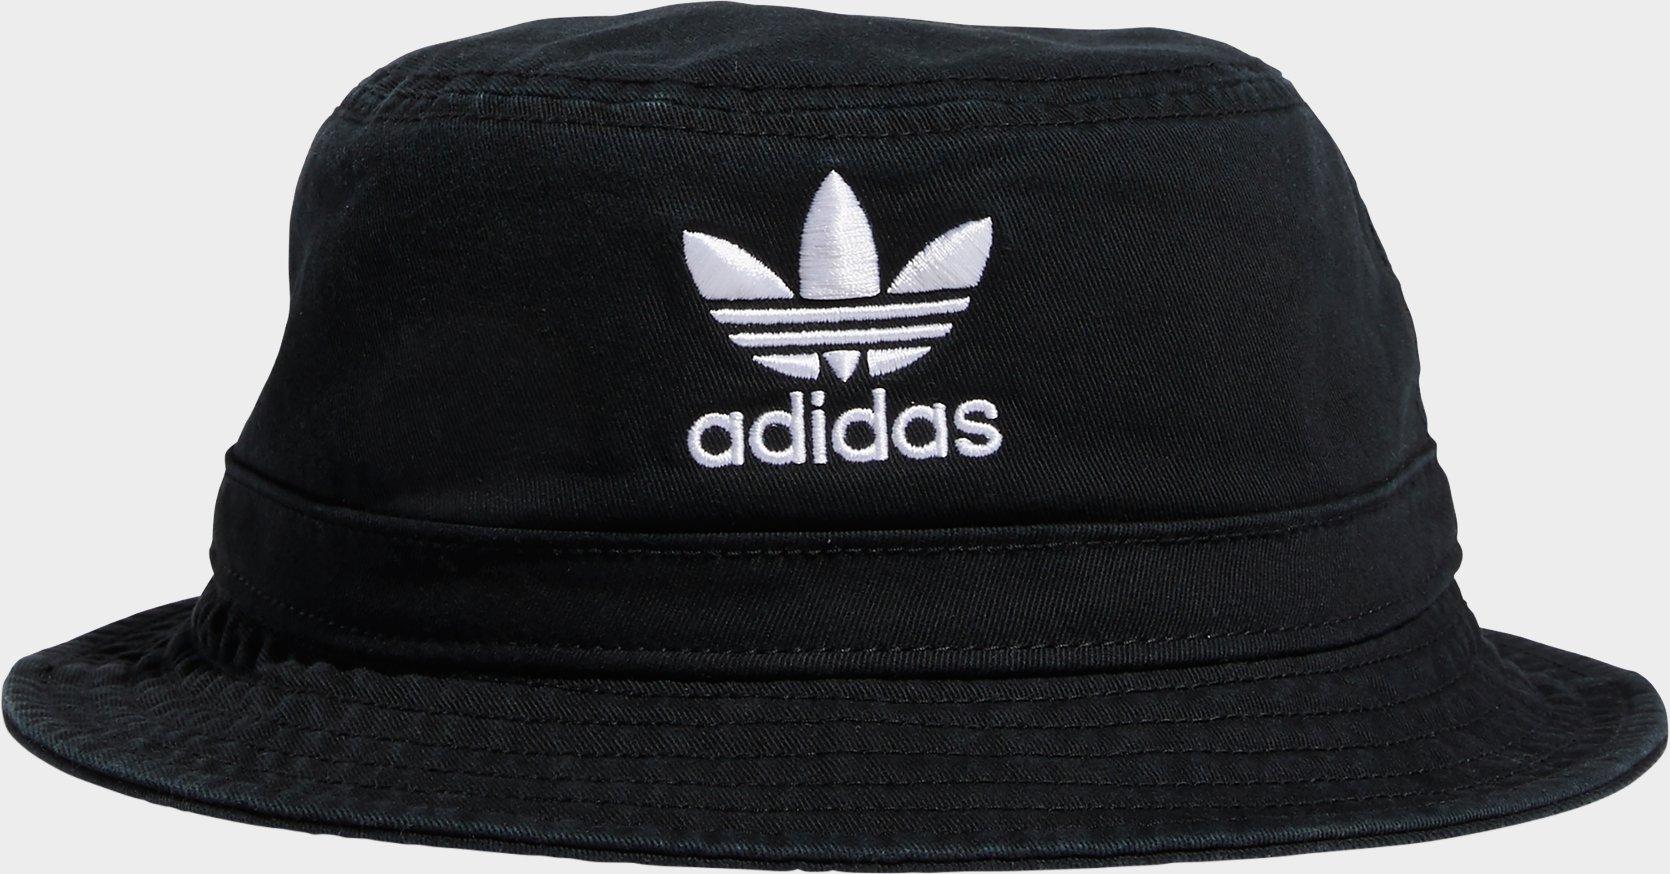 jd sports adidas bucket hat